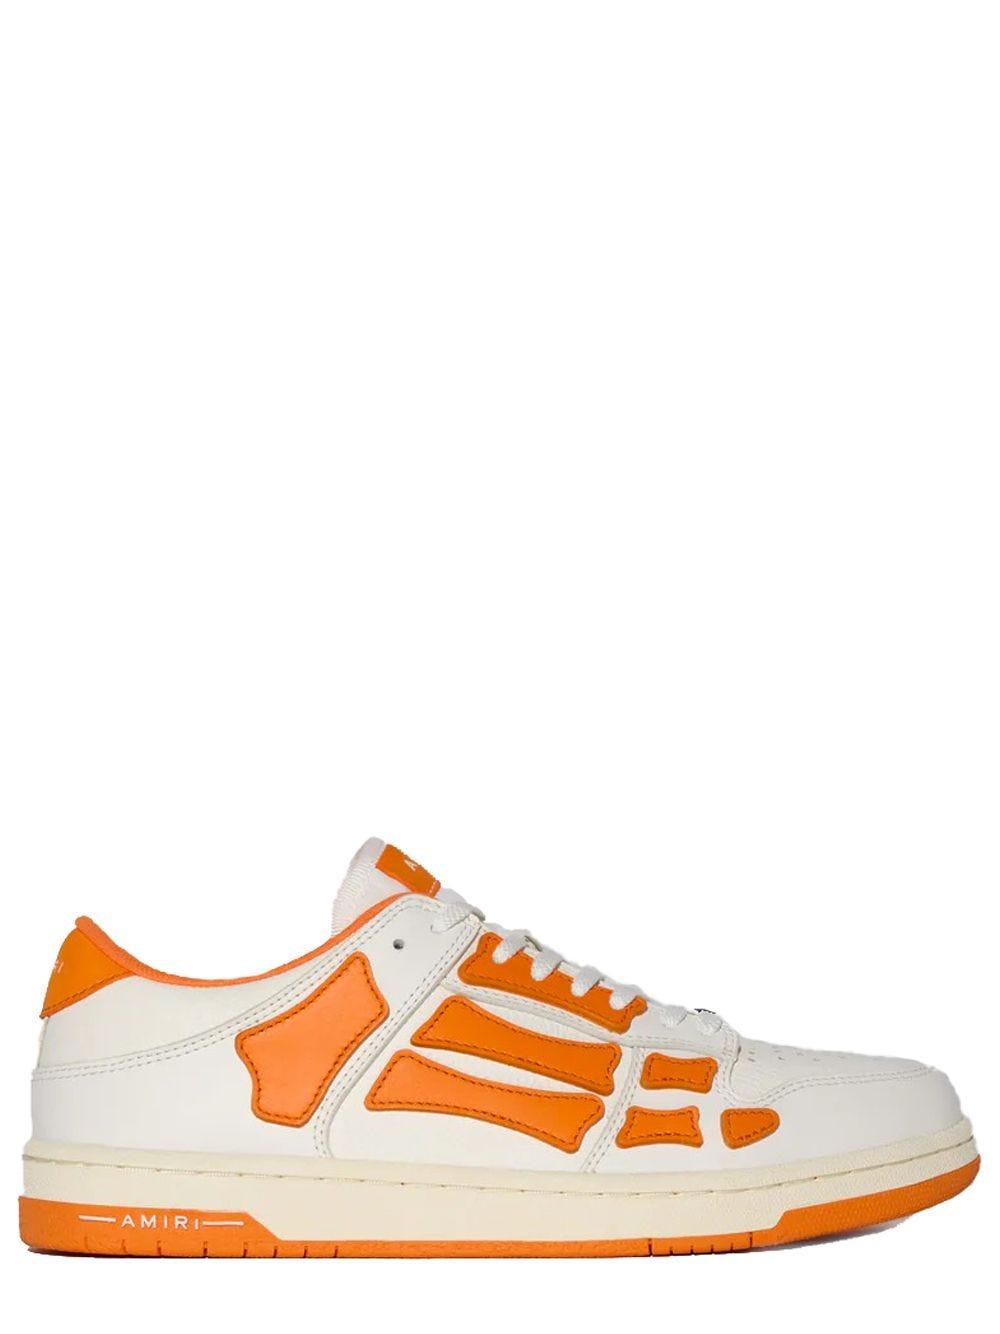 Amiri Skel White And Orange Low Top Sneakers for Men | Lyst